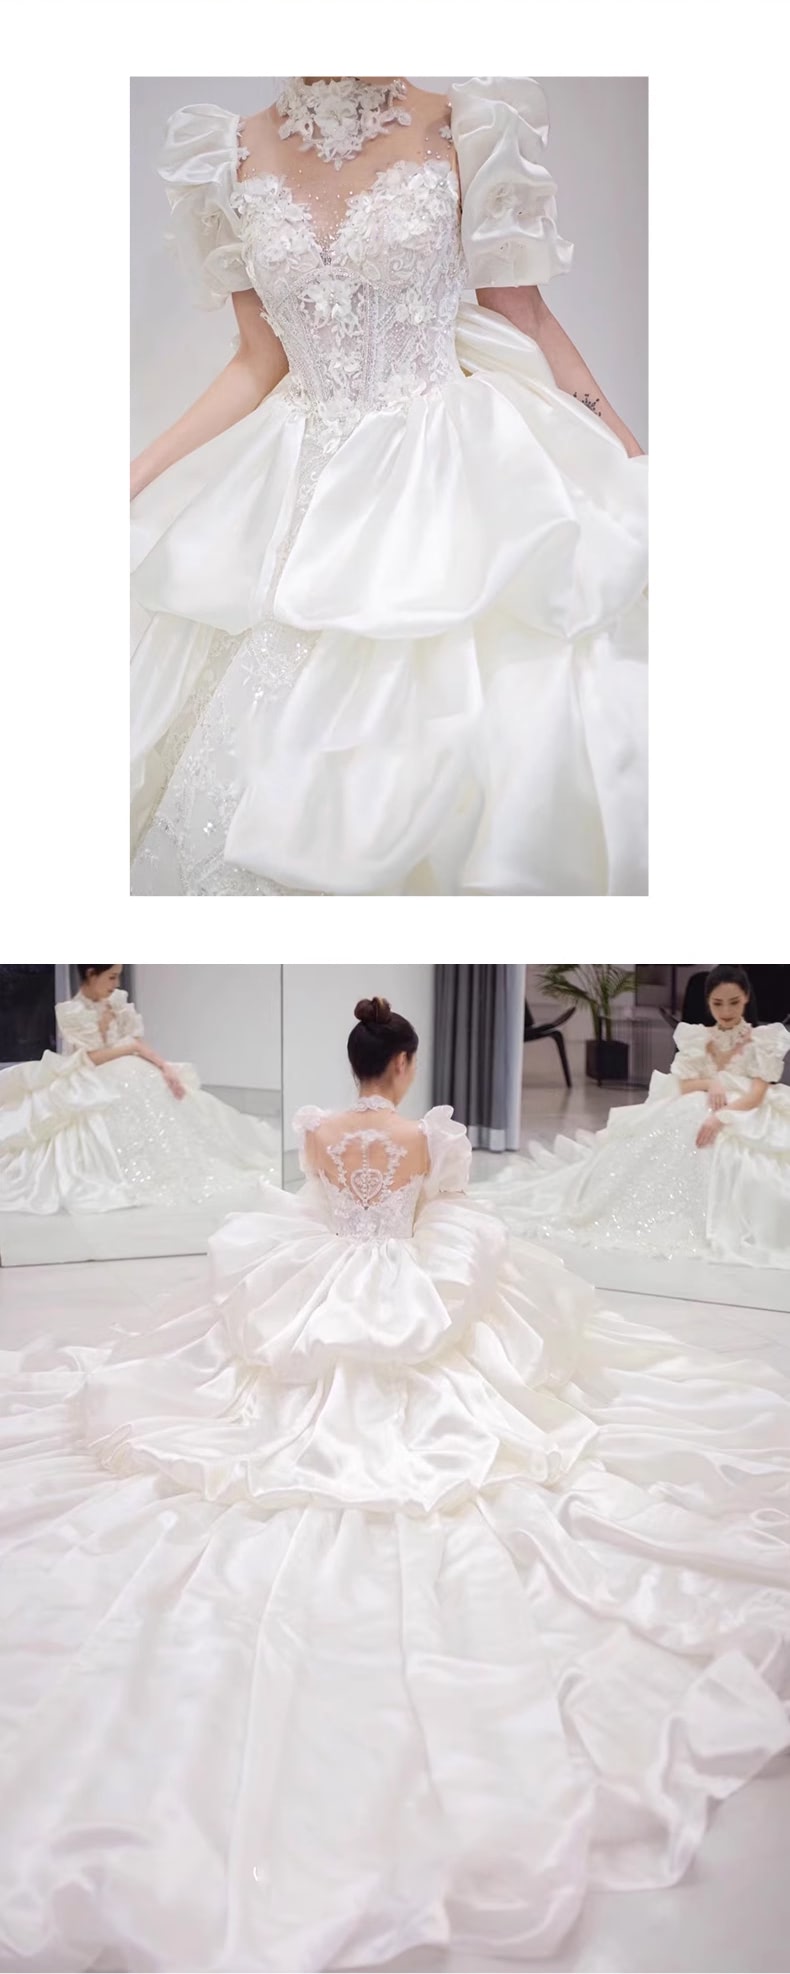 Retro-Princess-Embroidery-Puff-Sleeves-White-Satin-Bride-Wedding-Dress15